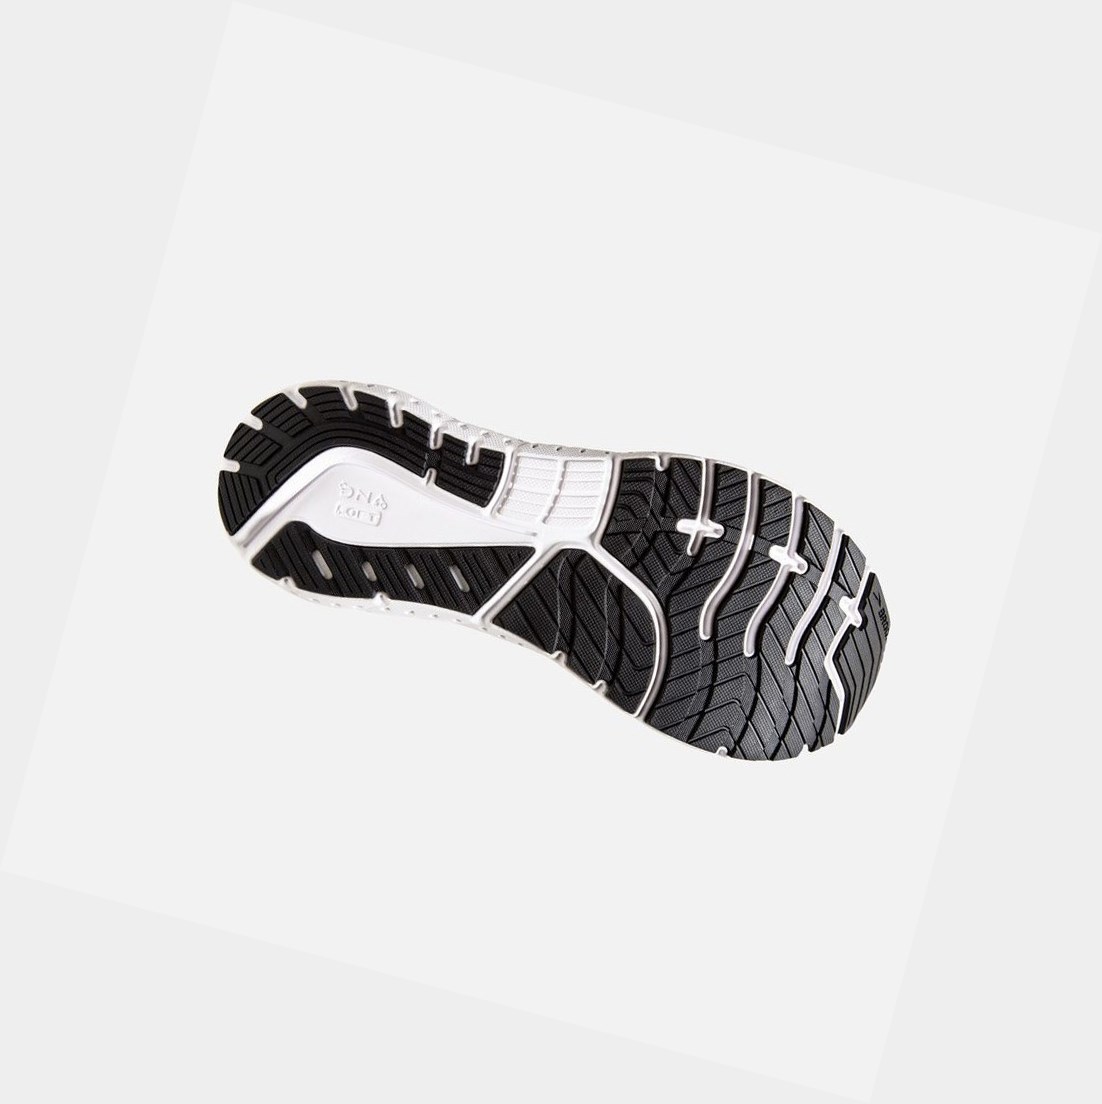 Brooks Glycerin 18 Men's Road Running Shoes Grey / Black / Red | WLVU-37405